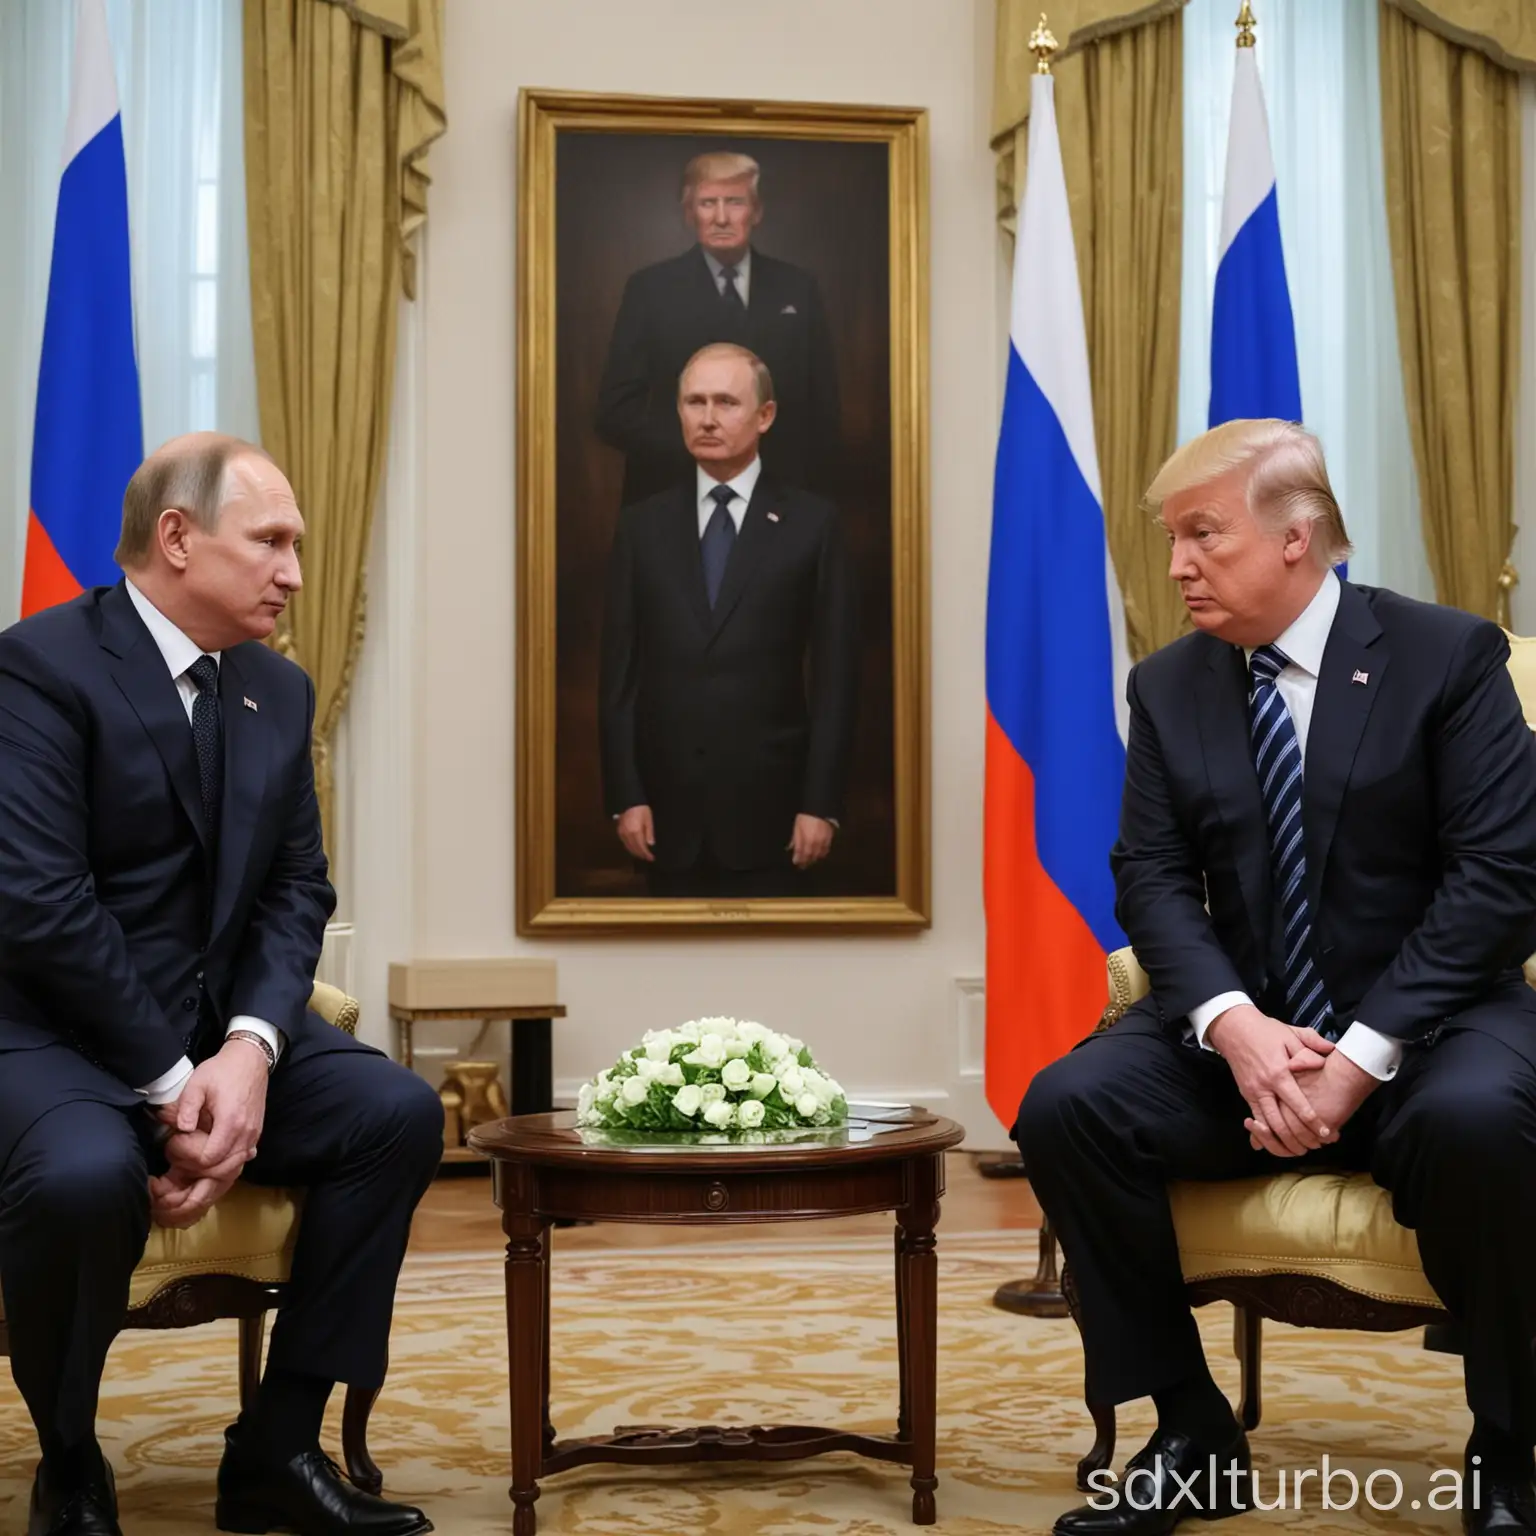 Trump with Putin